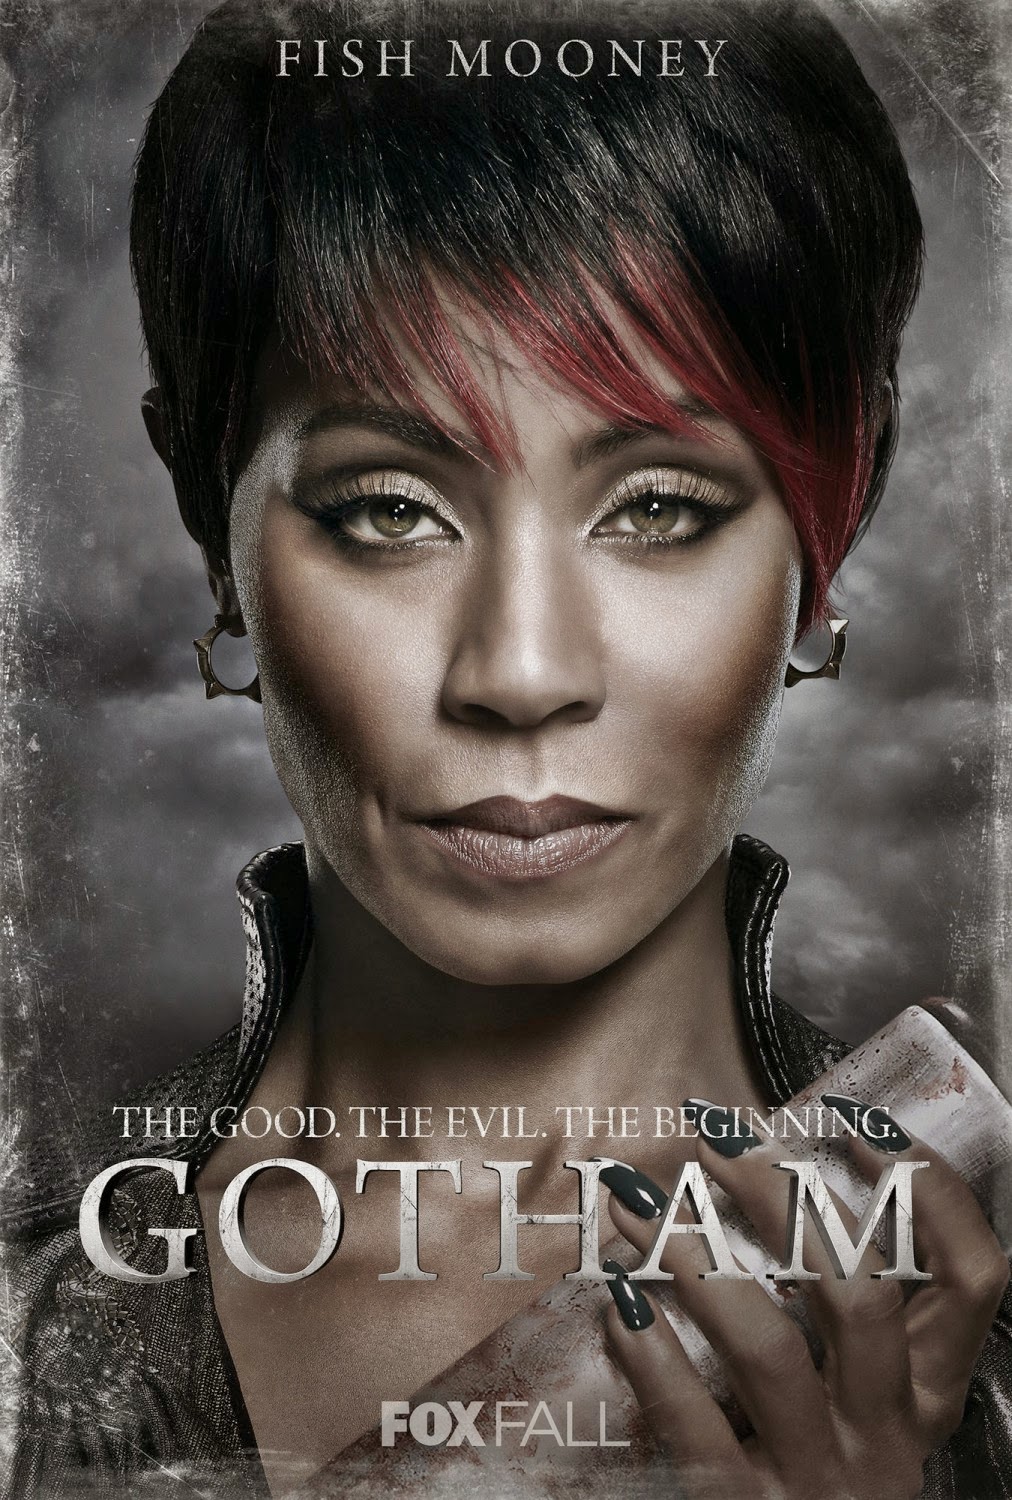 Gotham “The Good. The Evil. The Beginning.” Character TV Poster Set - Jada Pinkett Smith as Fish Mooney